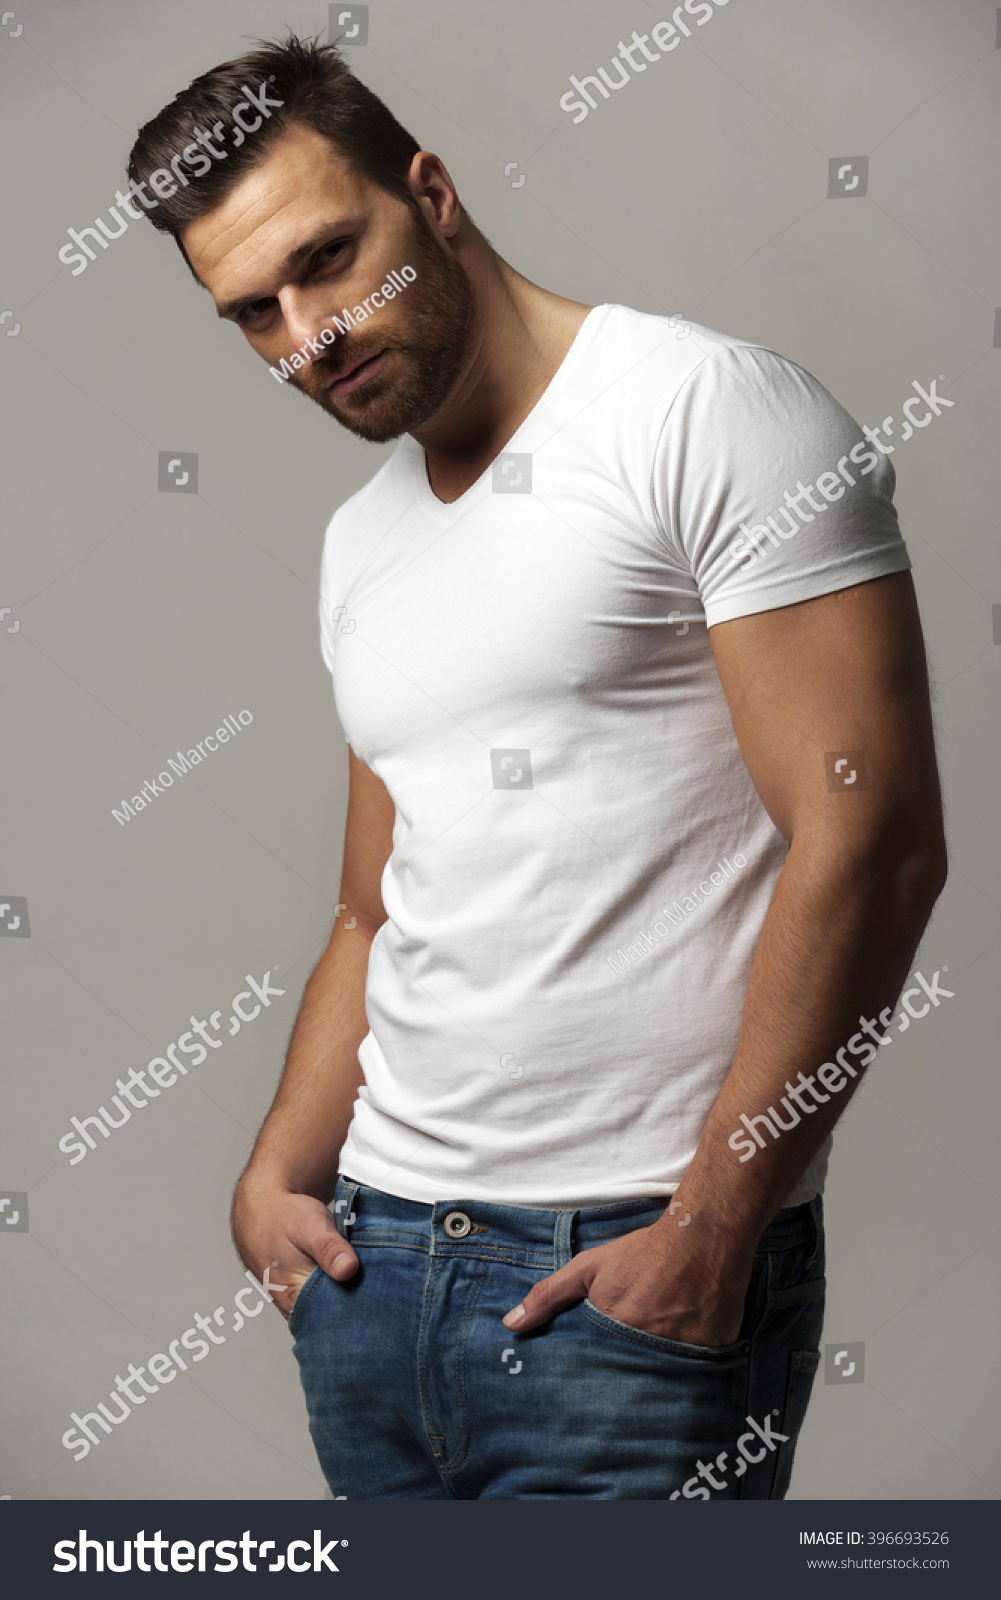 Tall muscular man Stock Photos, Images & Photography | Shutterstock